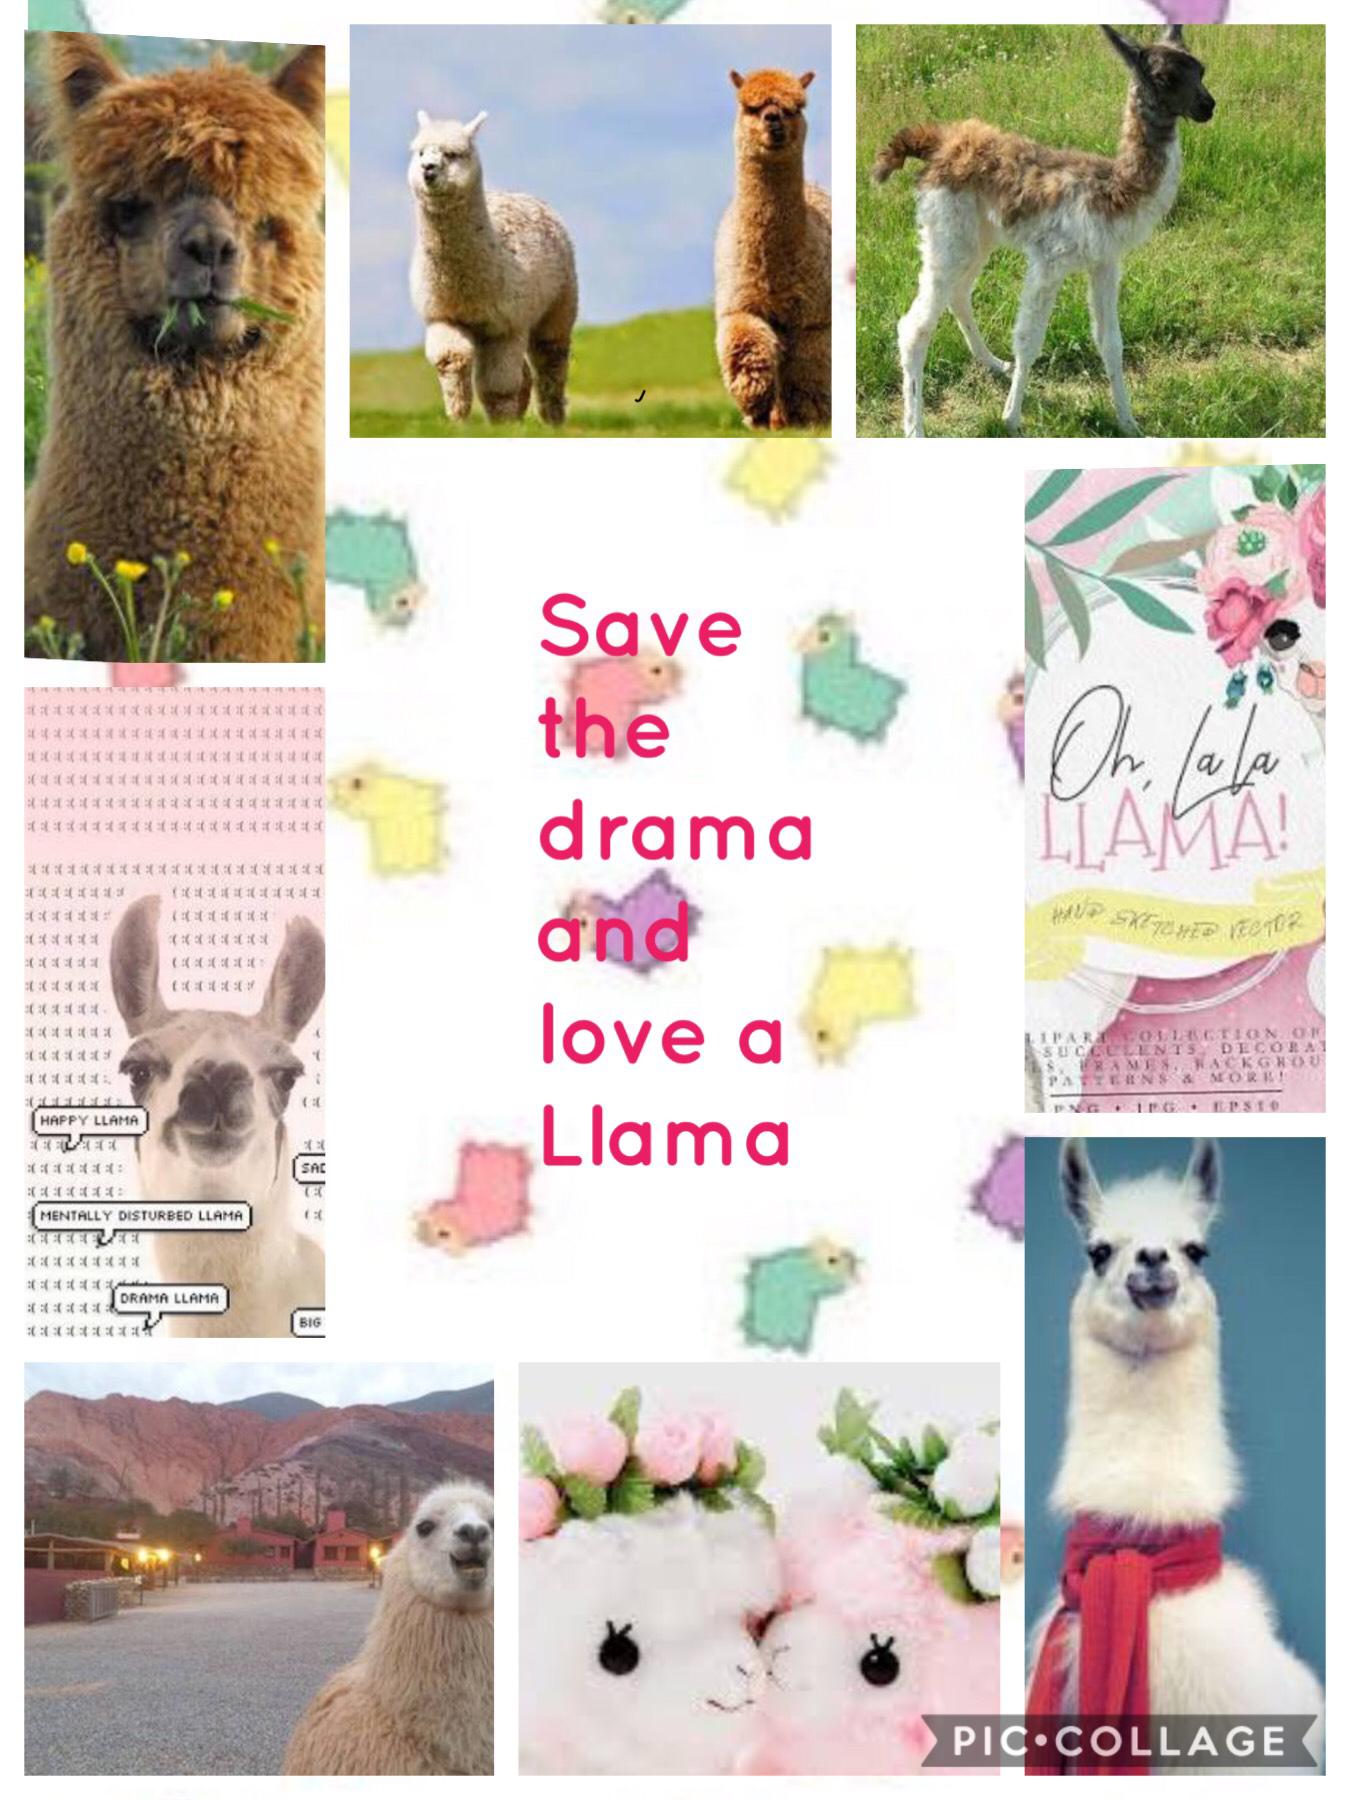 Save the drama and love a llama!